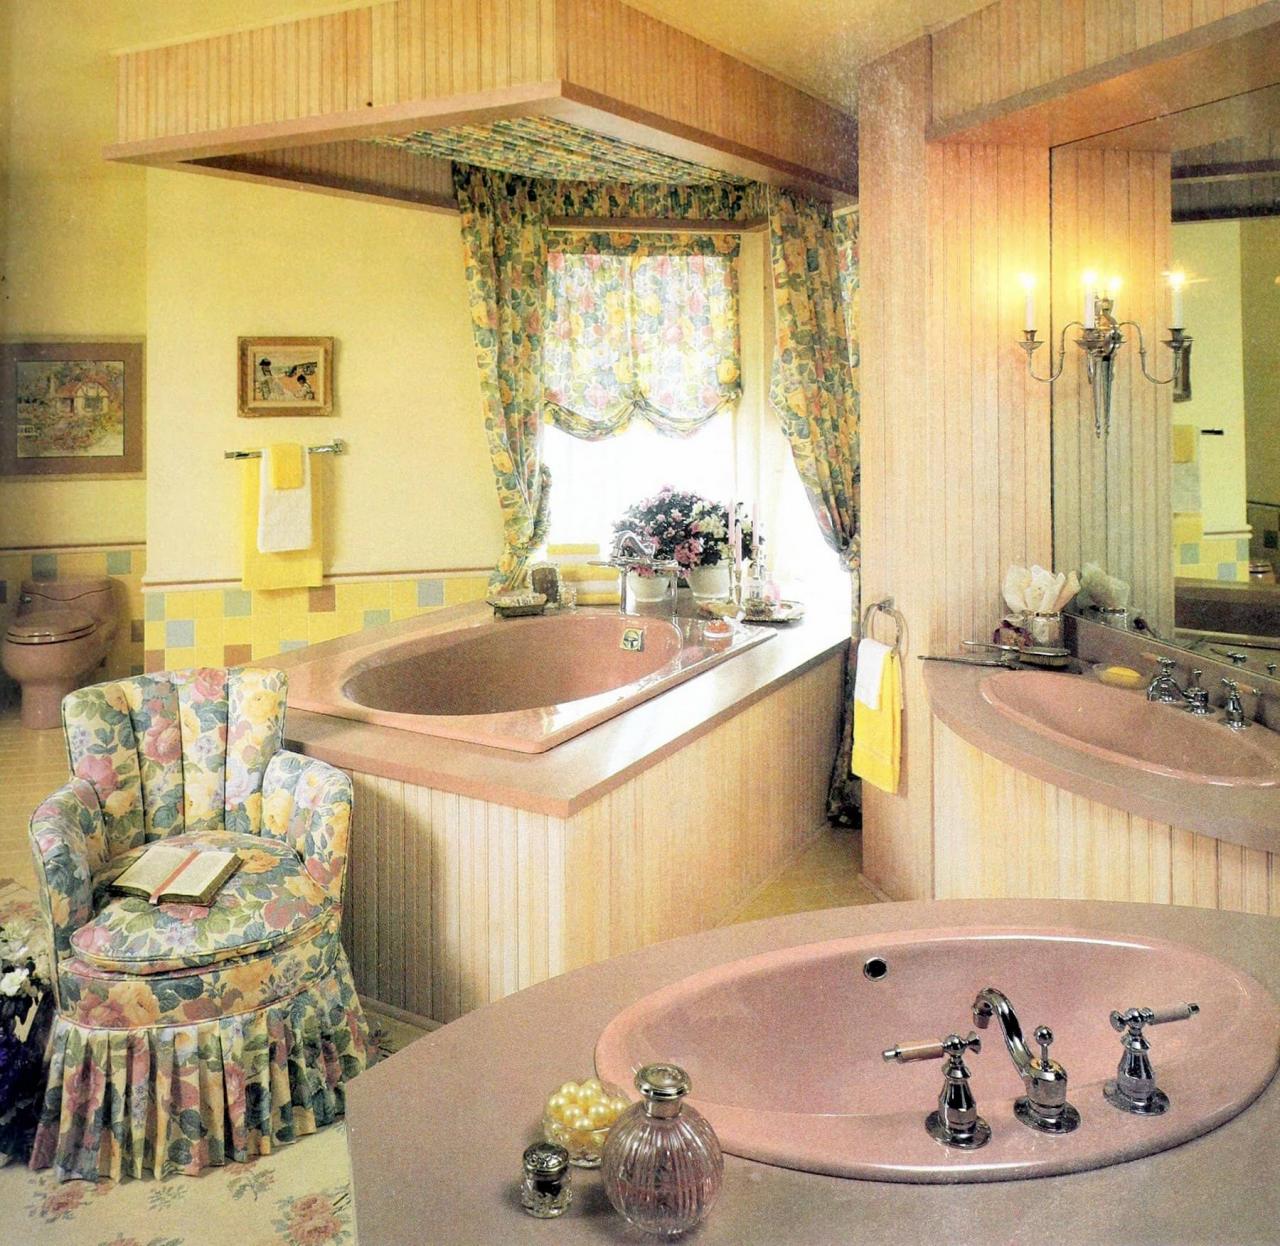 1980s bathroom decor & color schemes for that real retro look Click